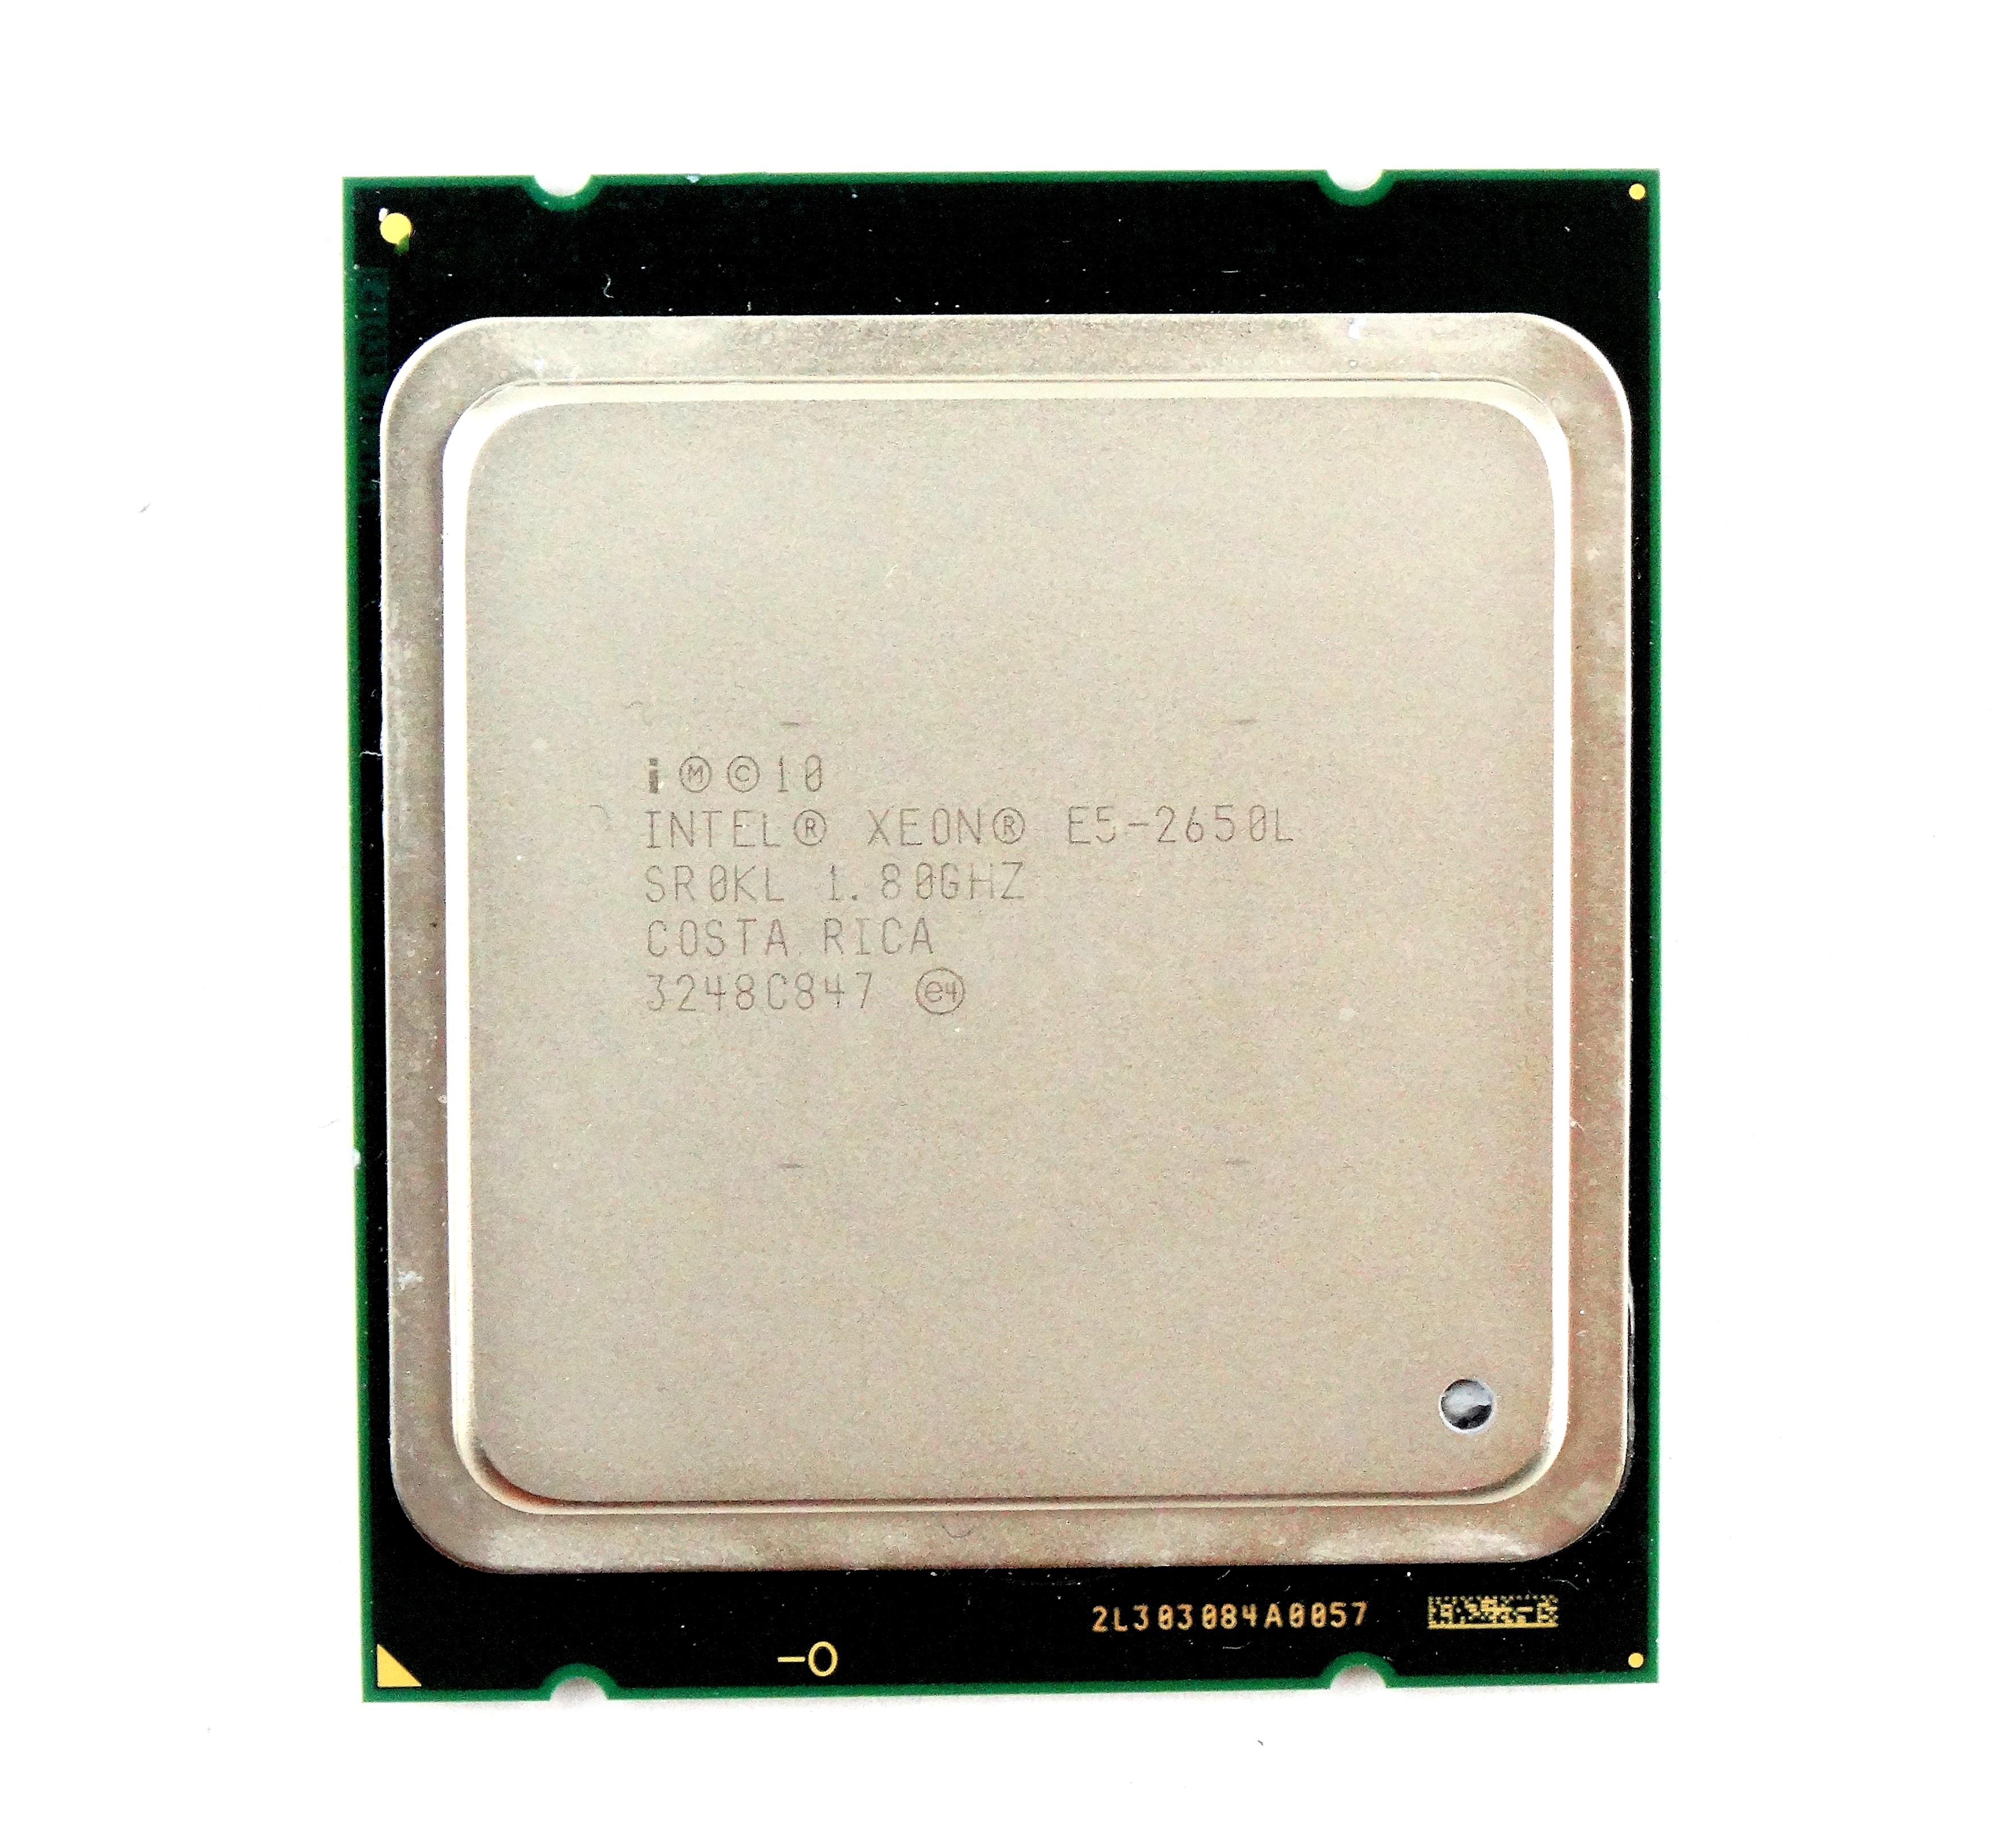 INTEL XEON E5-2650L 1.80GHZ 8CORE 20MB LGA2011 PROCESSOR (SR0KL)